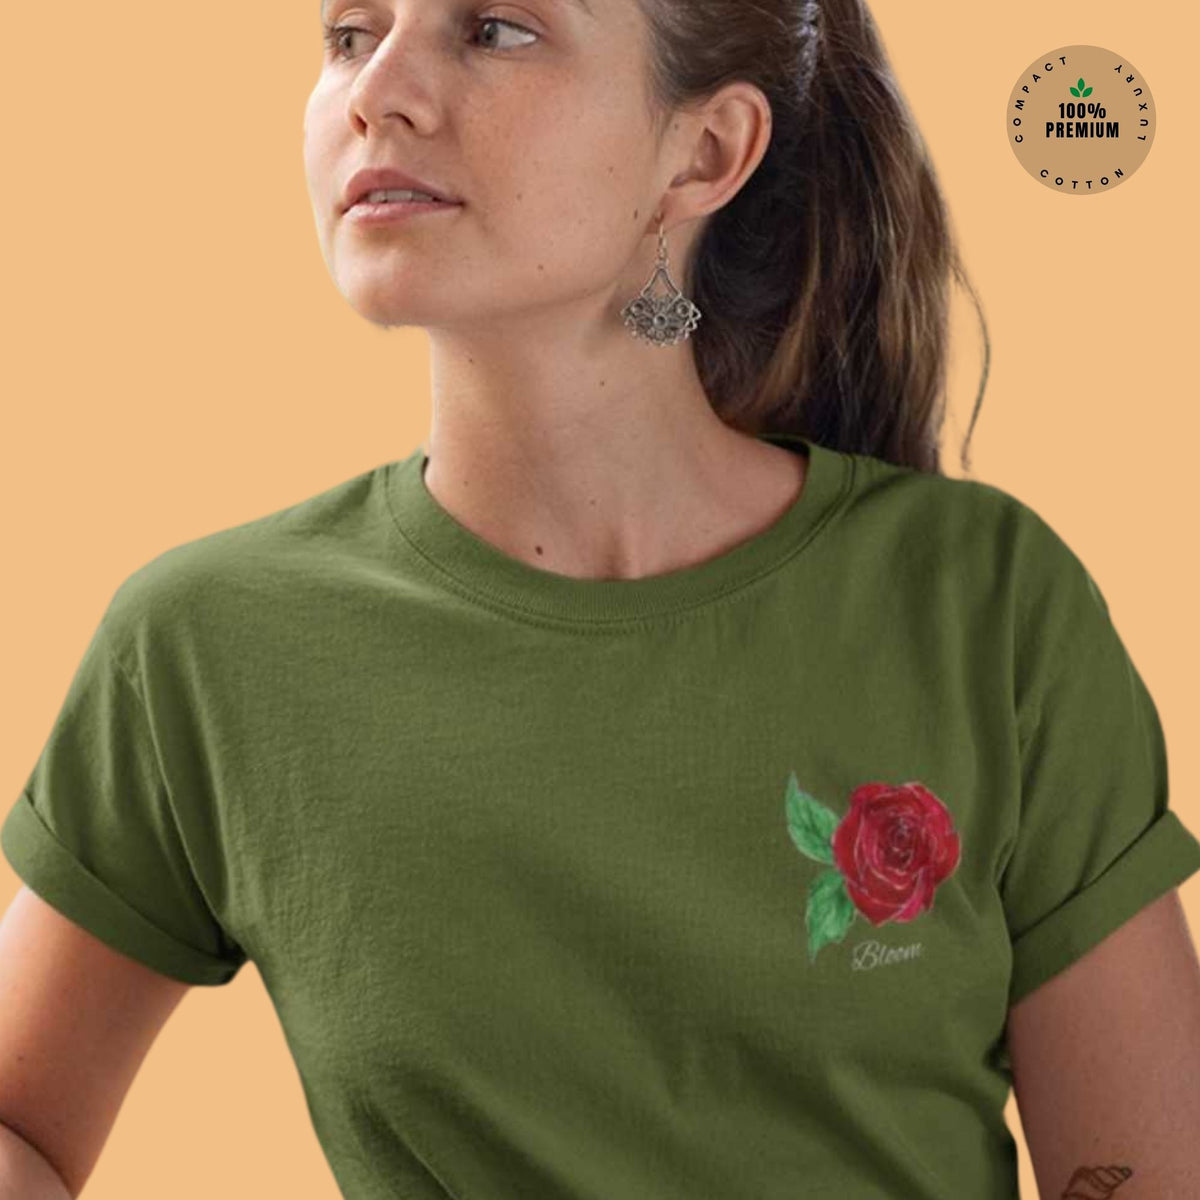 women-s-premiume-cotton-round-neck-half-sleeves-olive-green-the-pocket-rose-tshirt-gogirgit-com-2